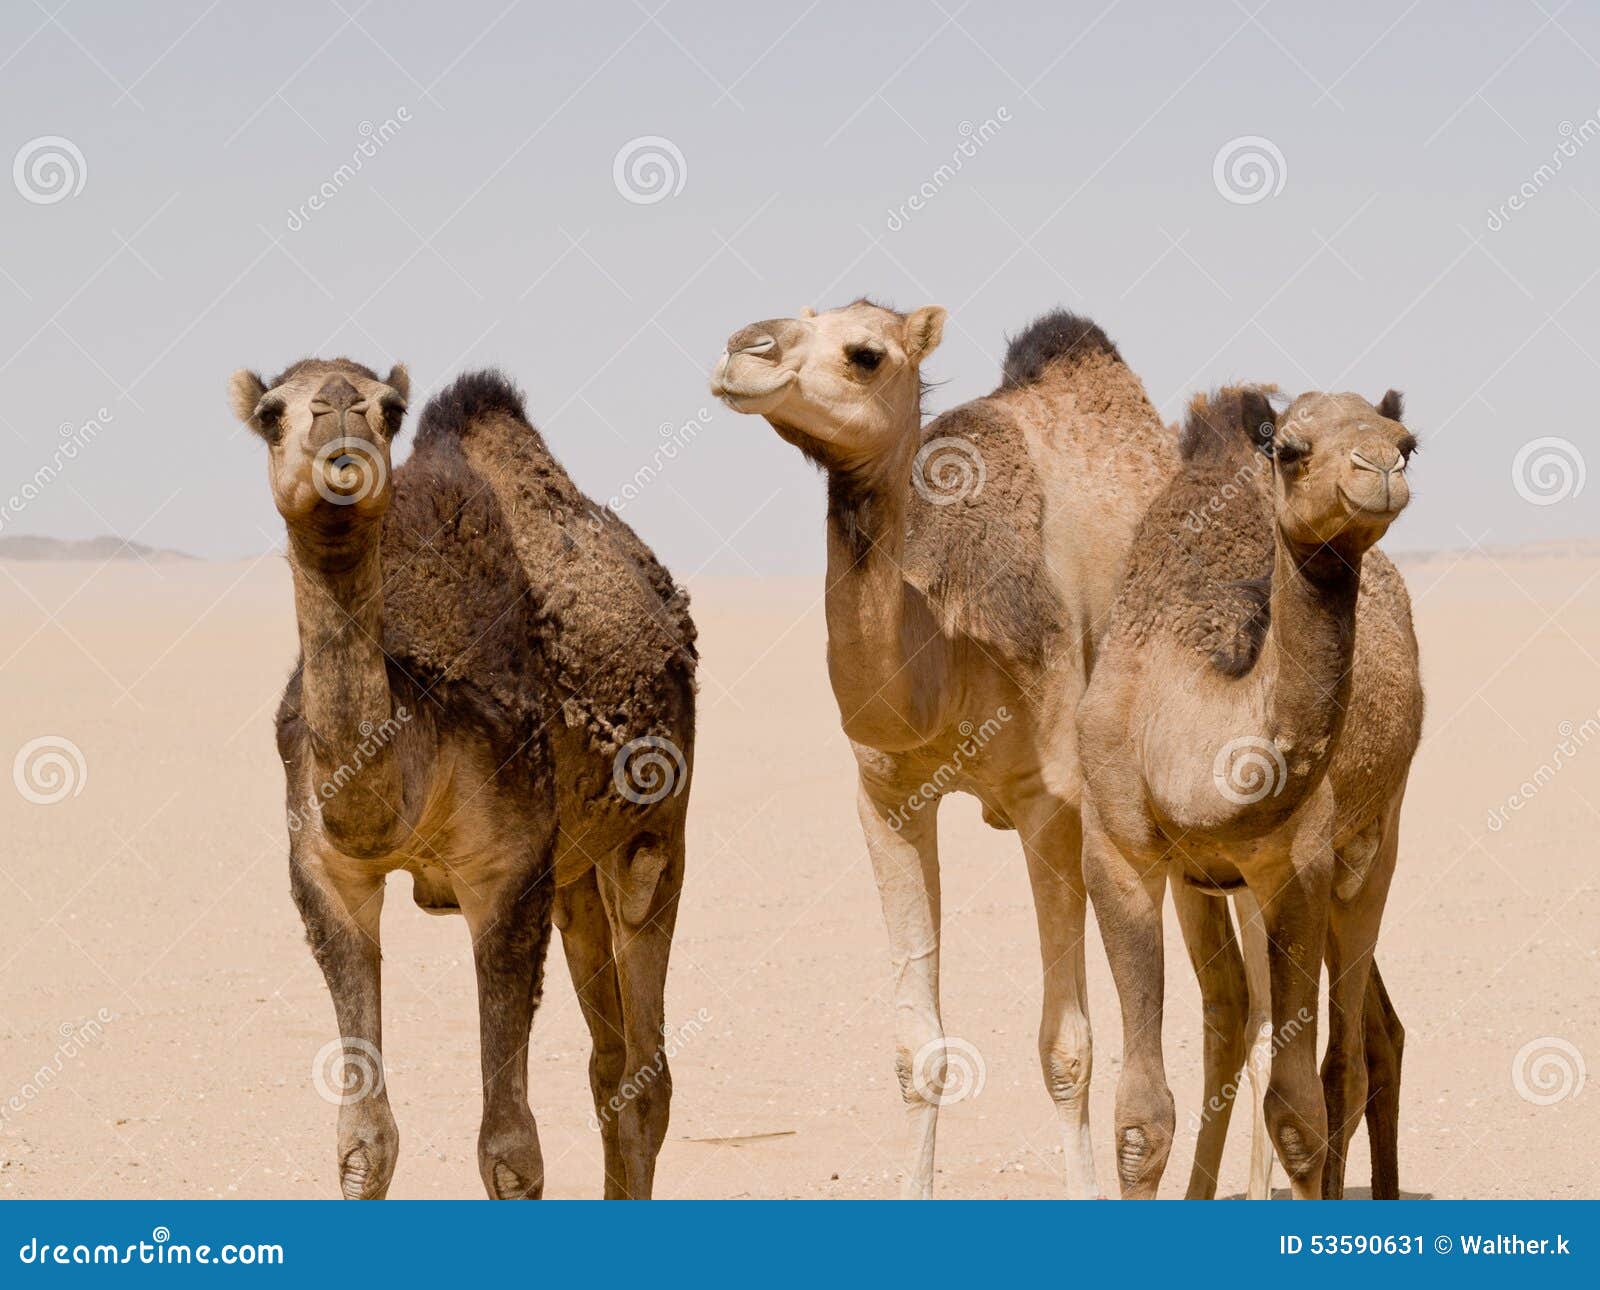 camels stood in the desert